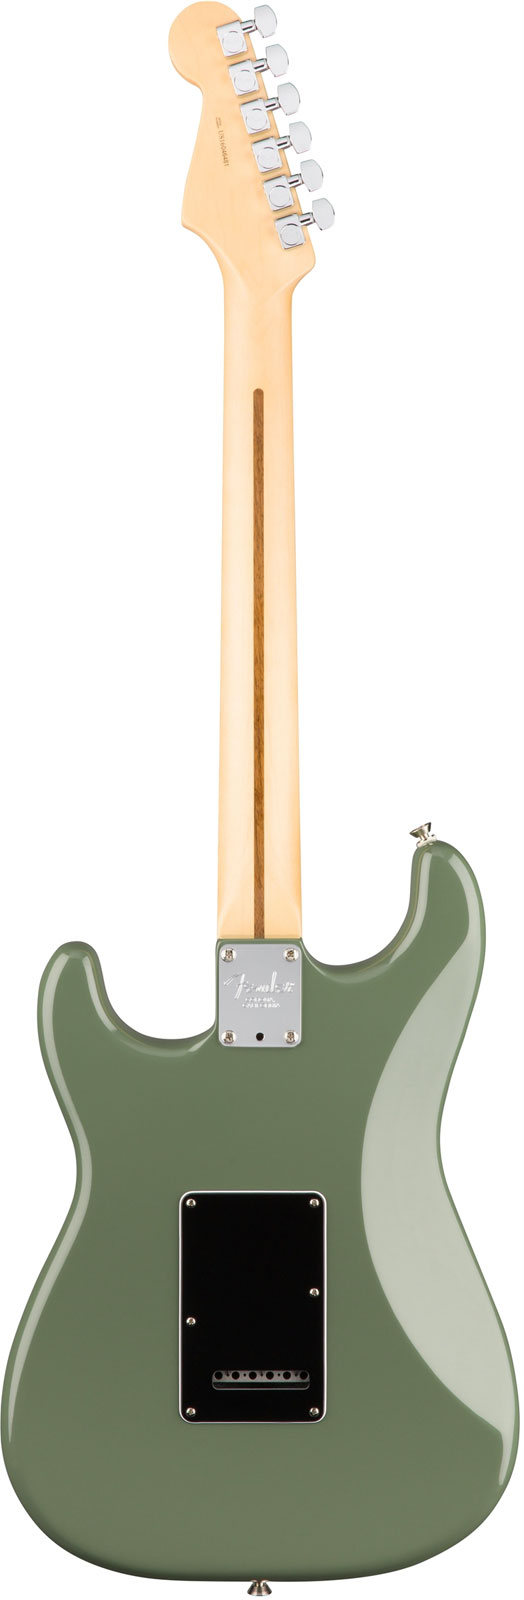 Fender Strat American Professional 2017 3s Usa Rw - Antique Olive - Guitarra eléctrica con forma de str. - Variation 2